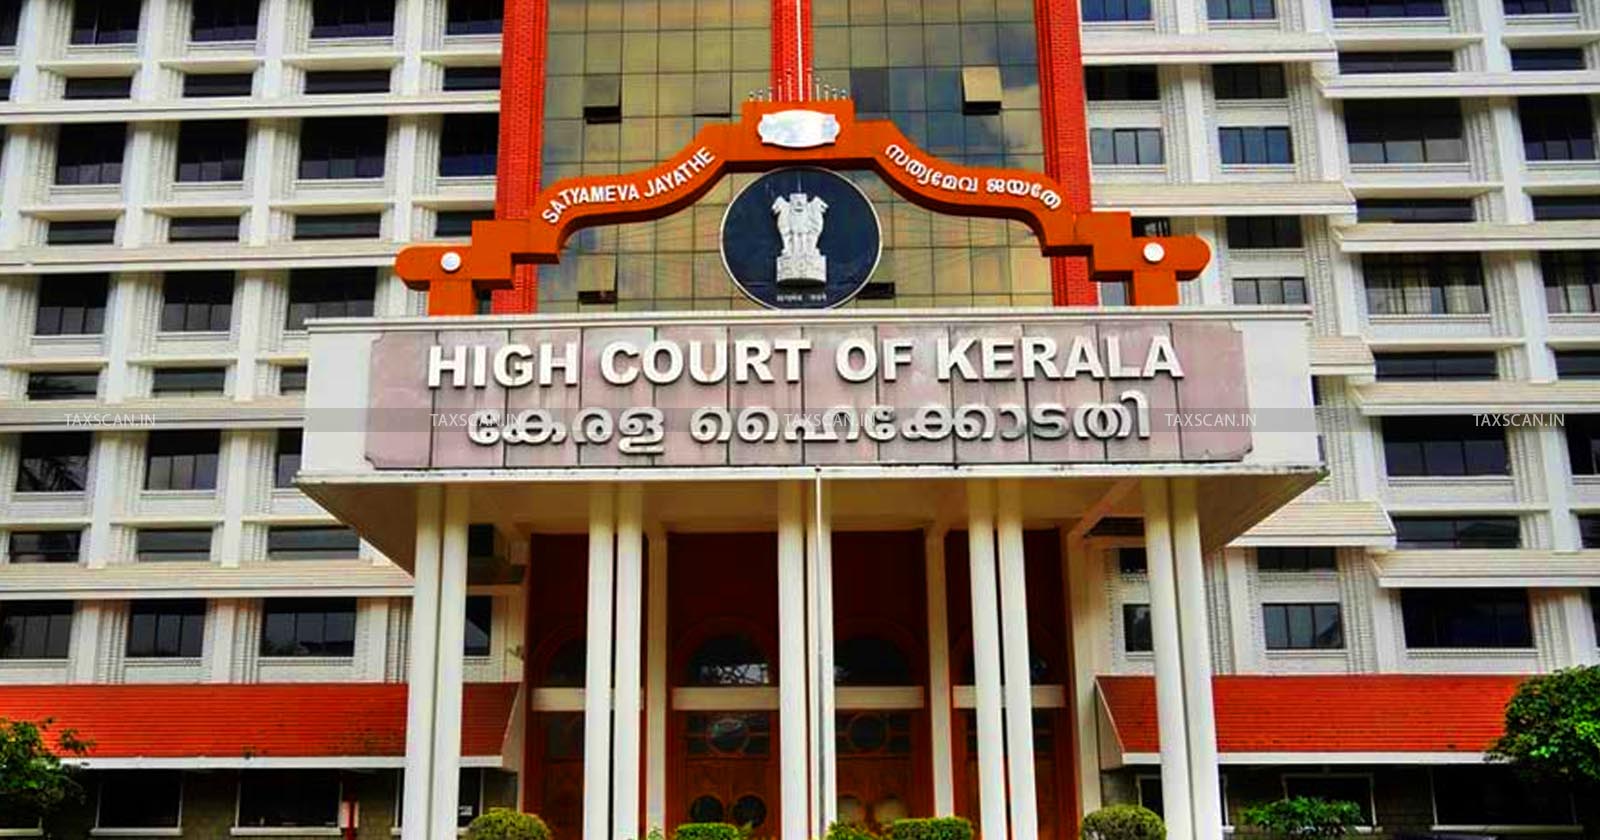 Income Tax - Kerala High Court - Income tax news - Income tax portal - taxscan